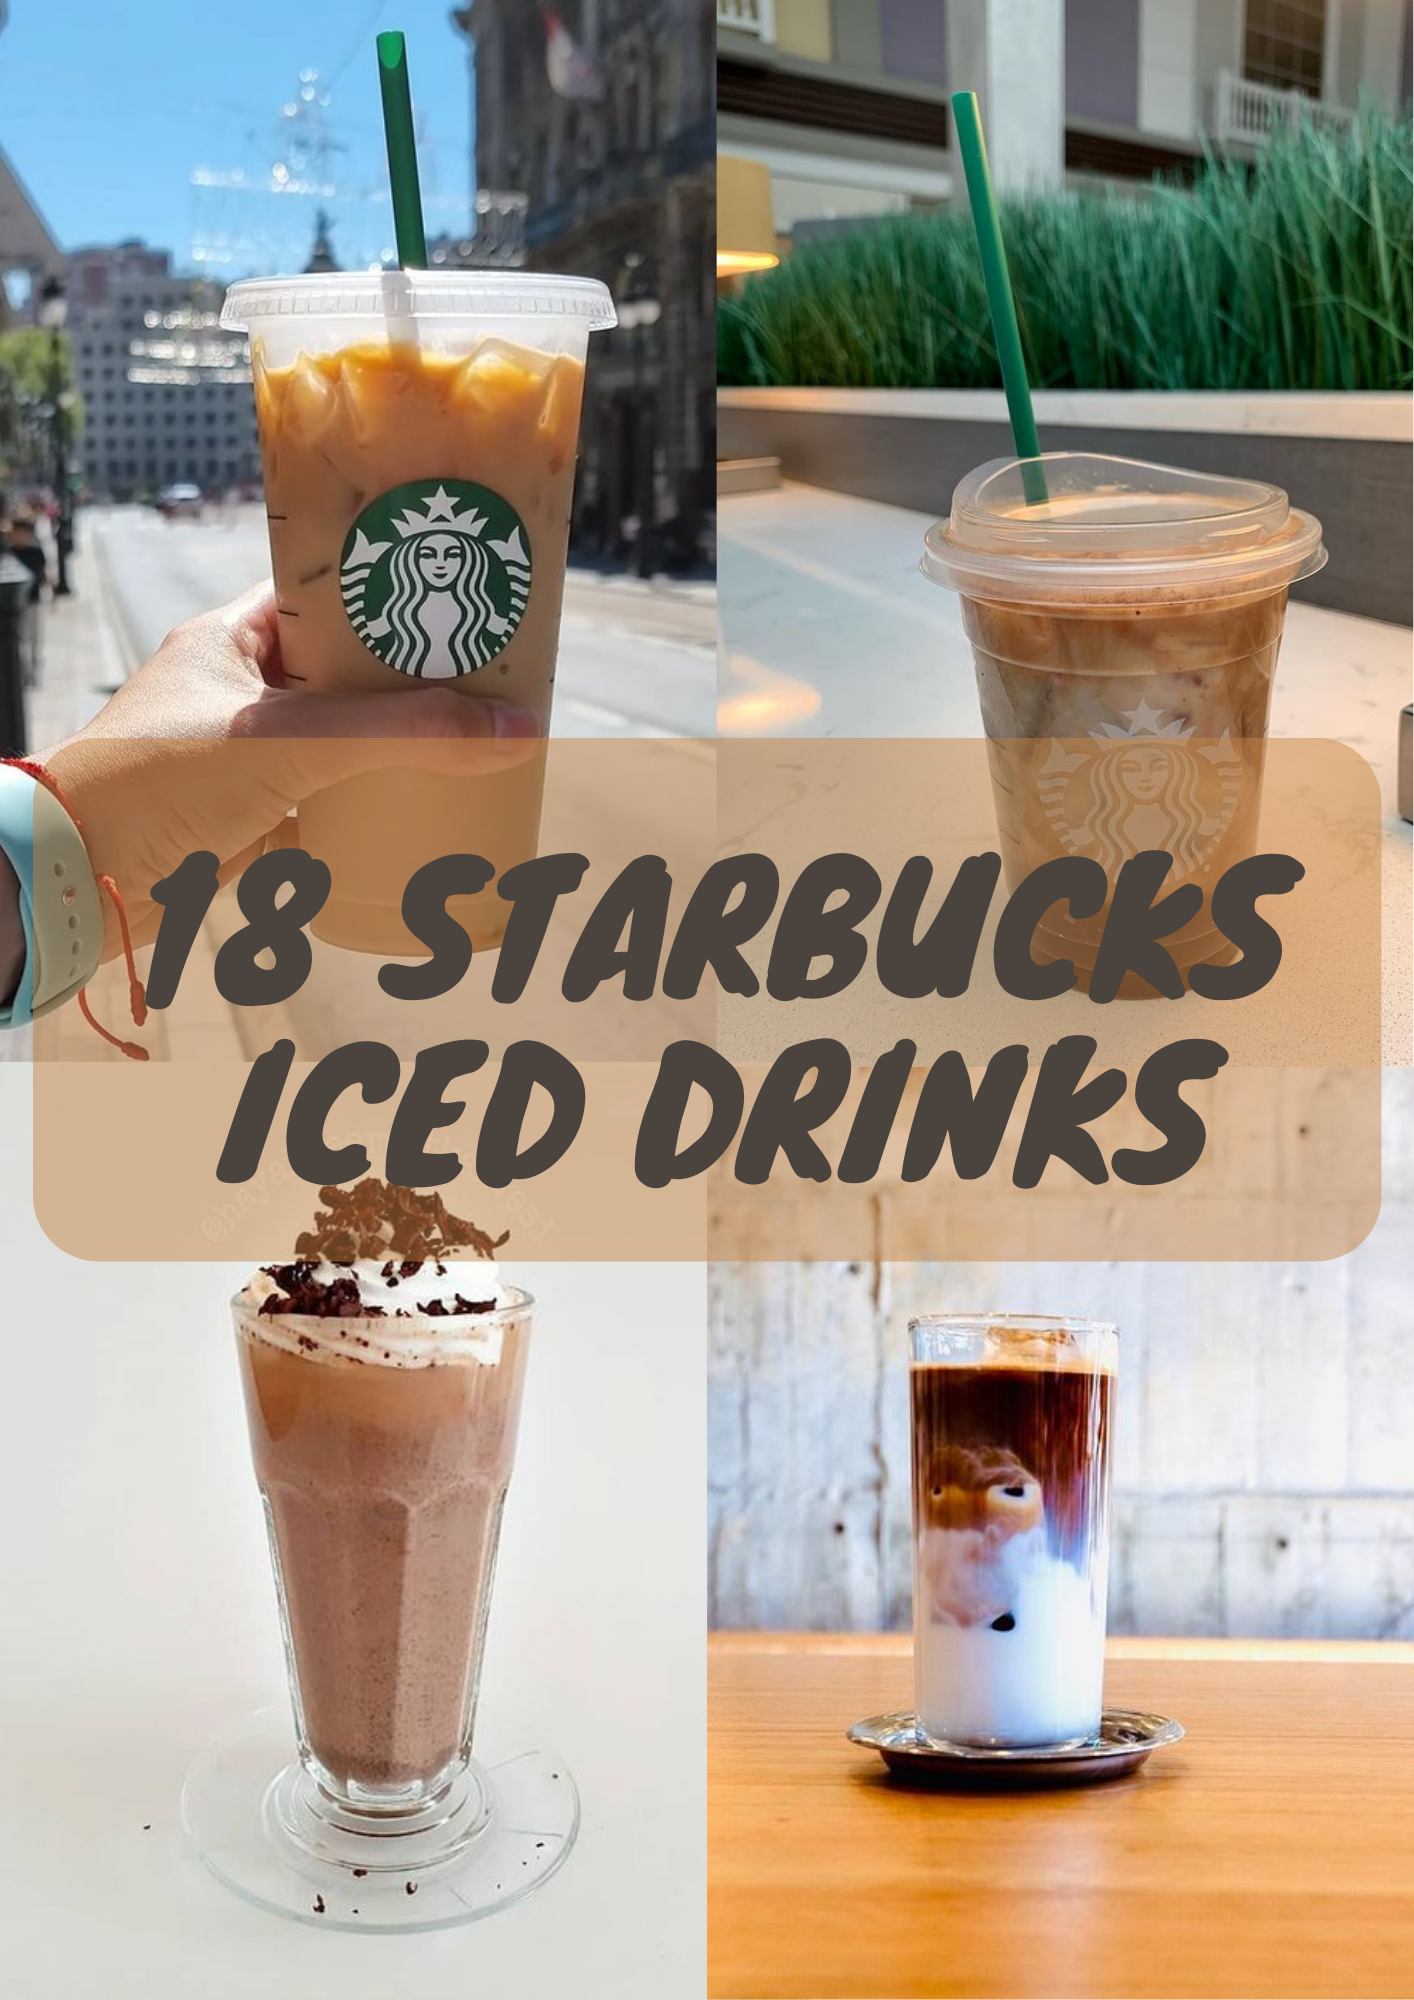 https://www.dashofbutter.com/wp-content/uploads/2022/08/Starbucks-Iced-drinks.png